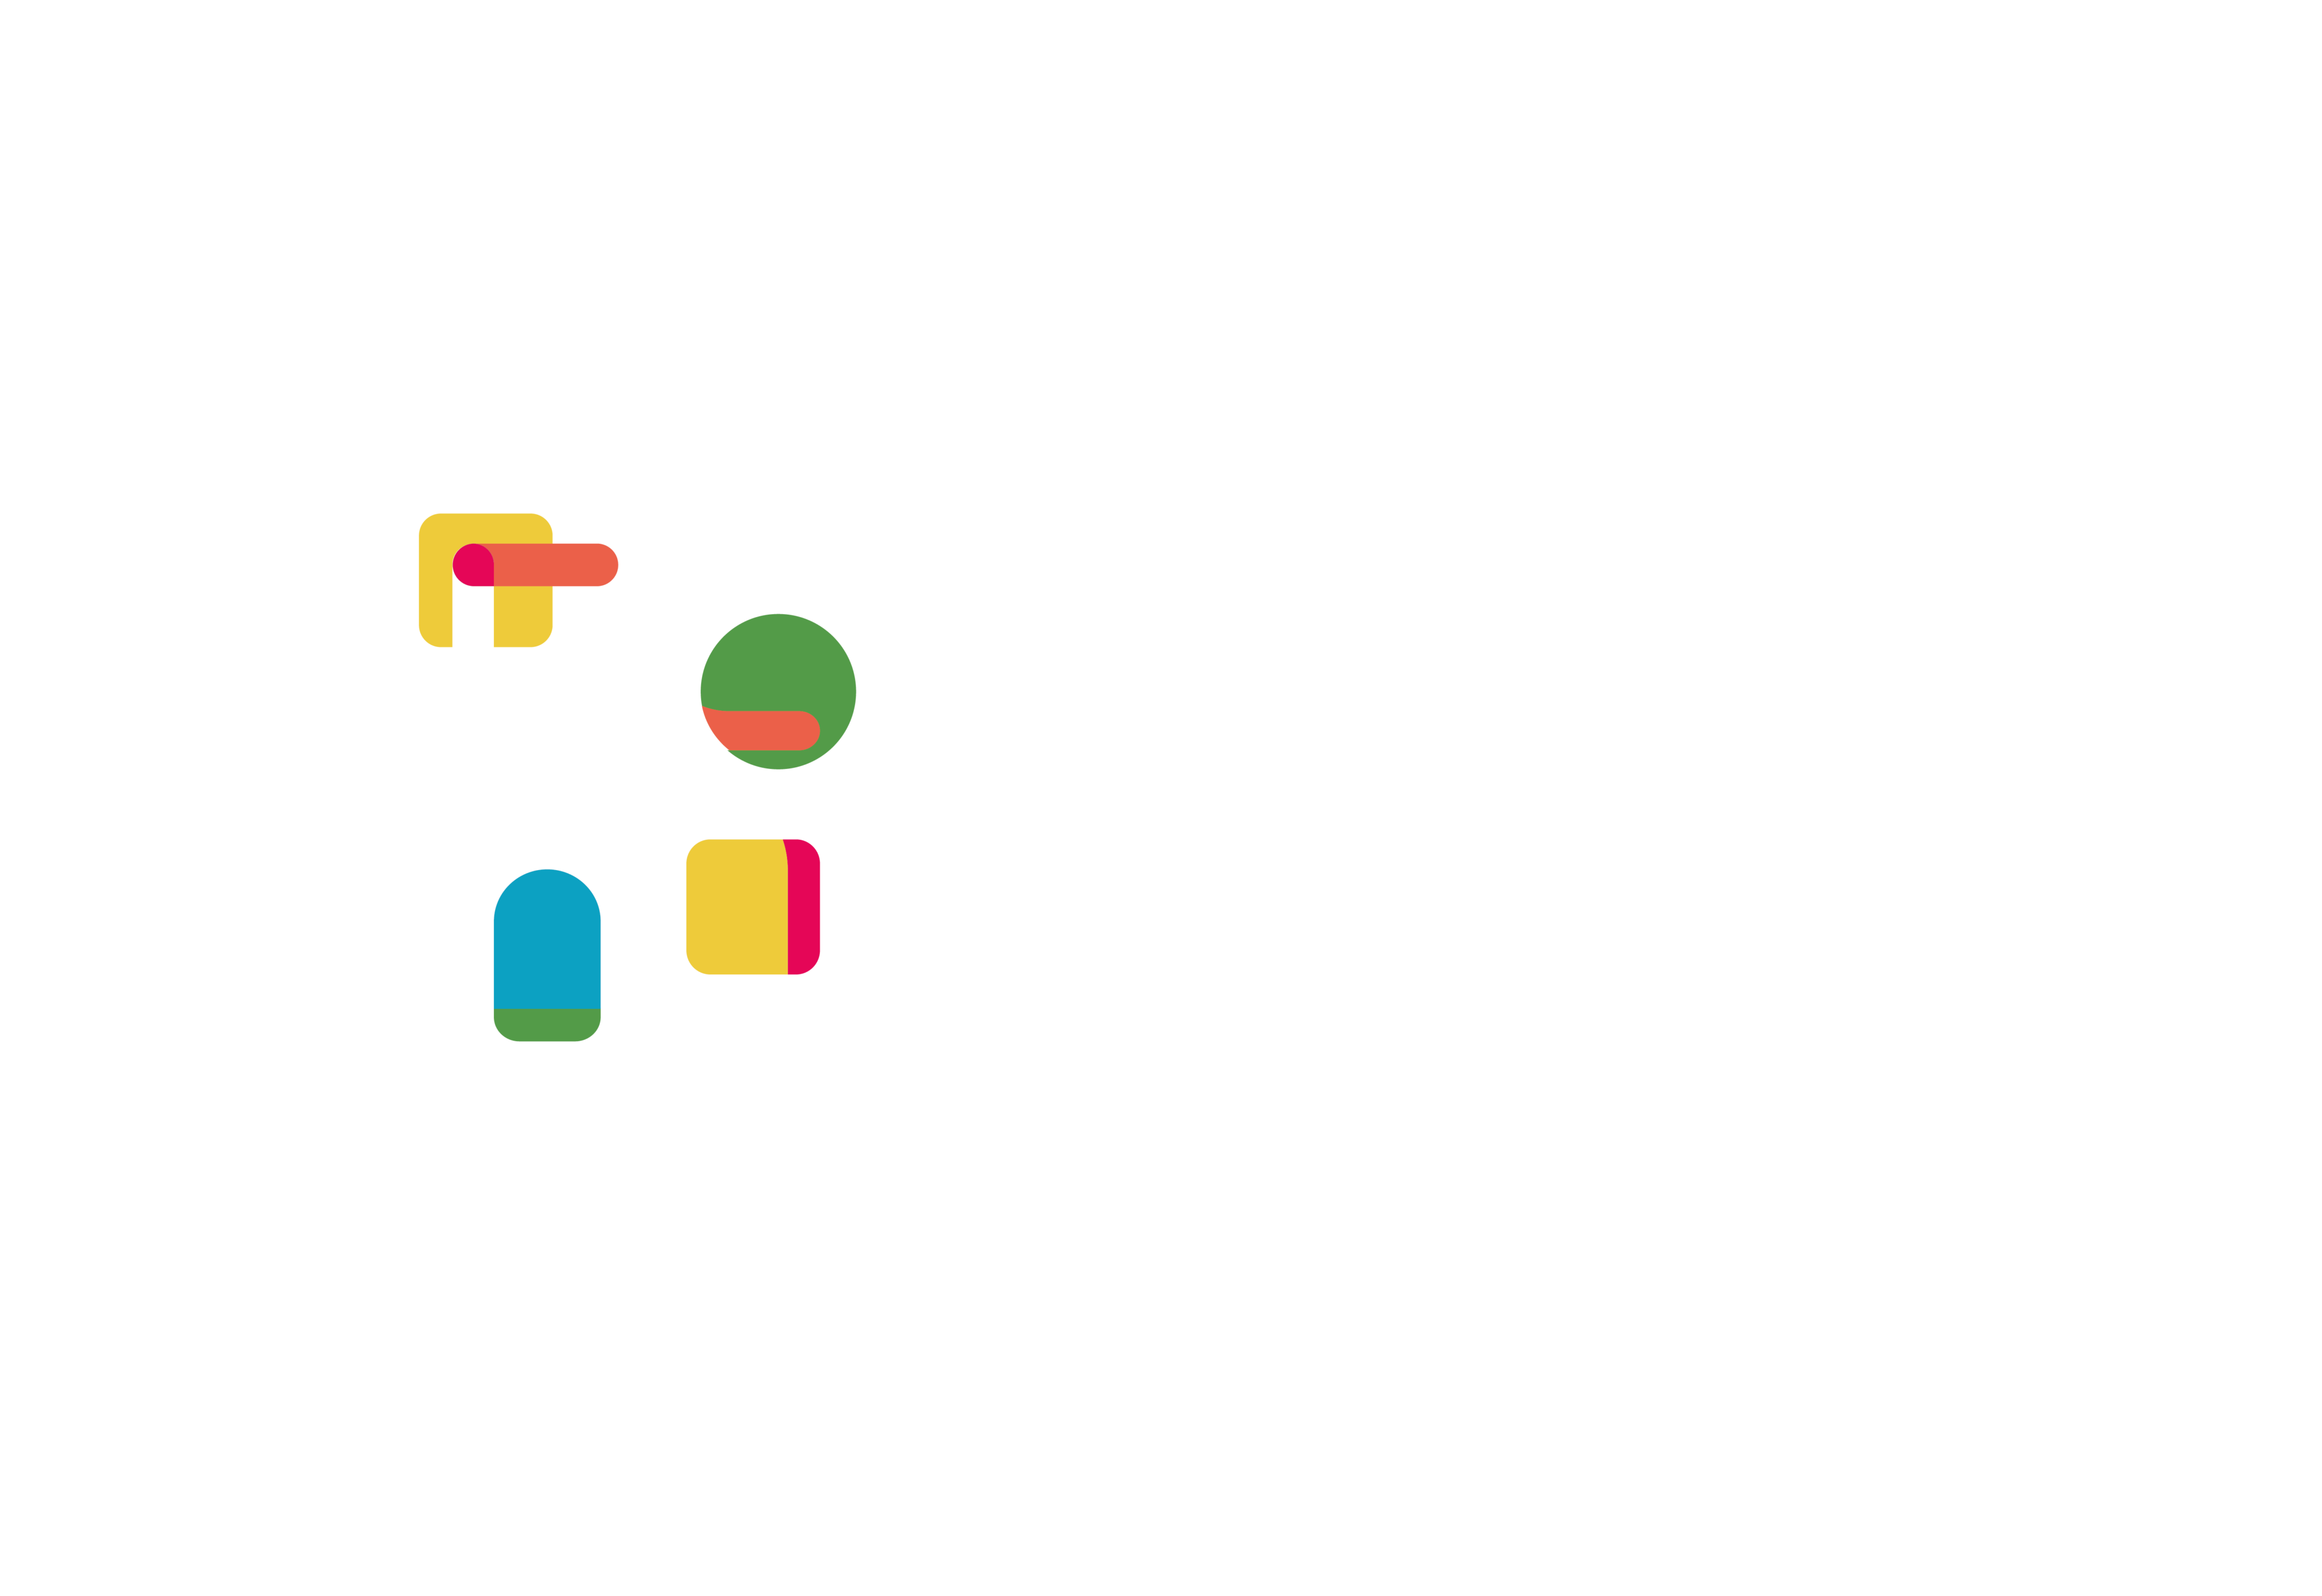 Foothills Creative Beginnings